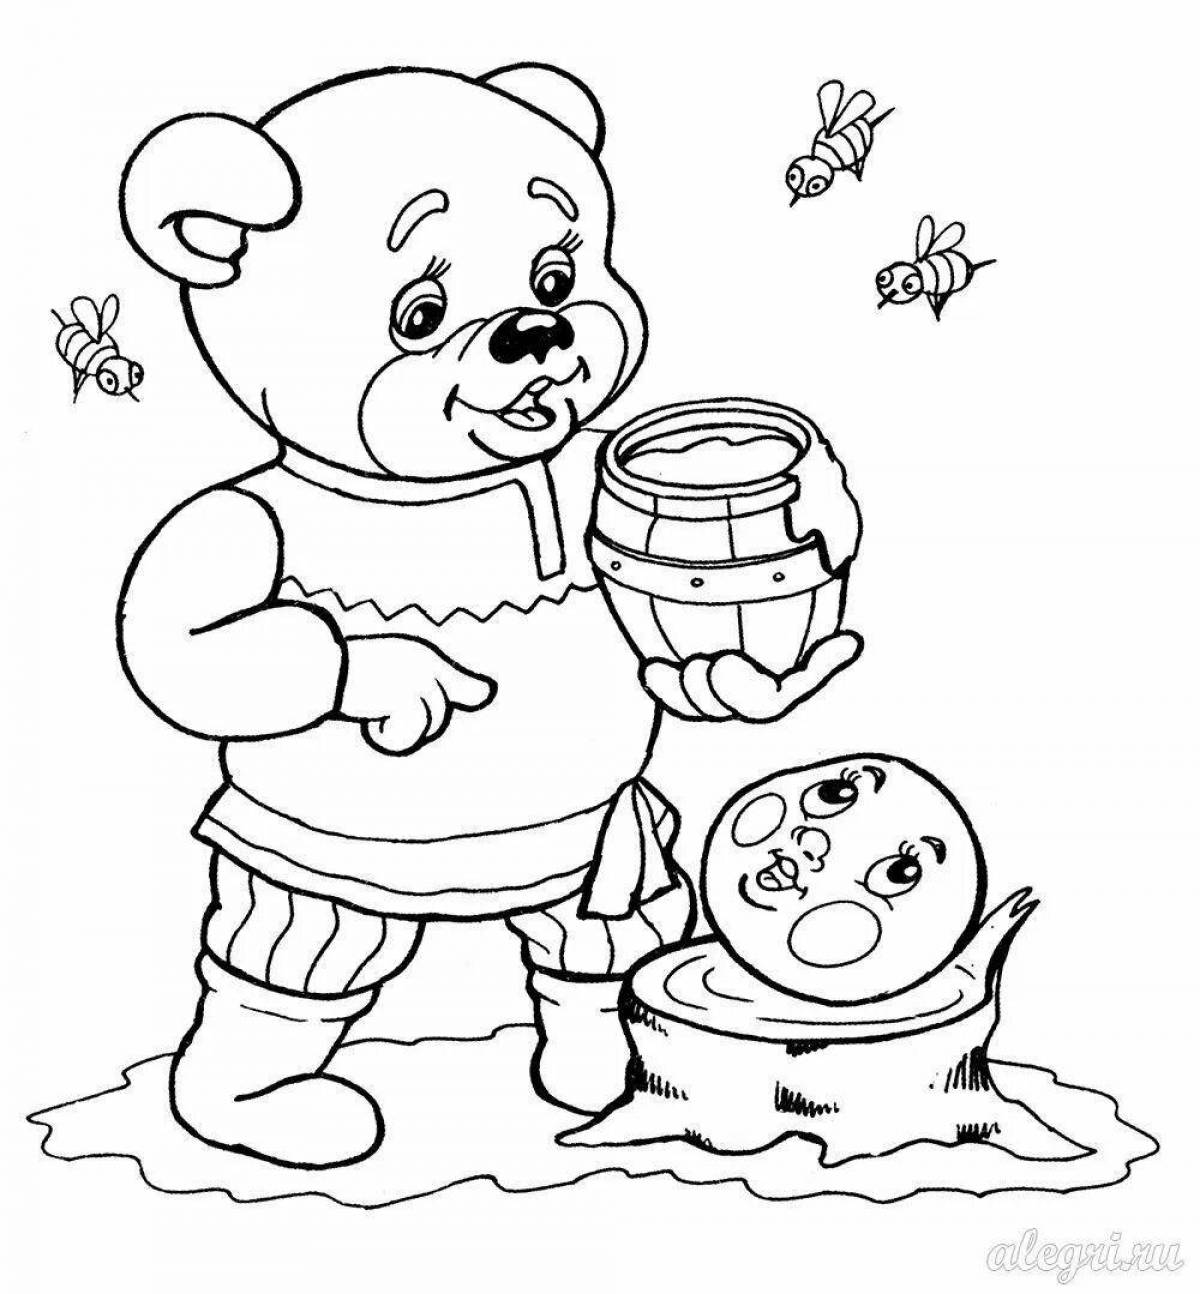 Funny bear coloring book